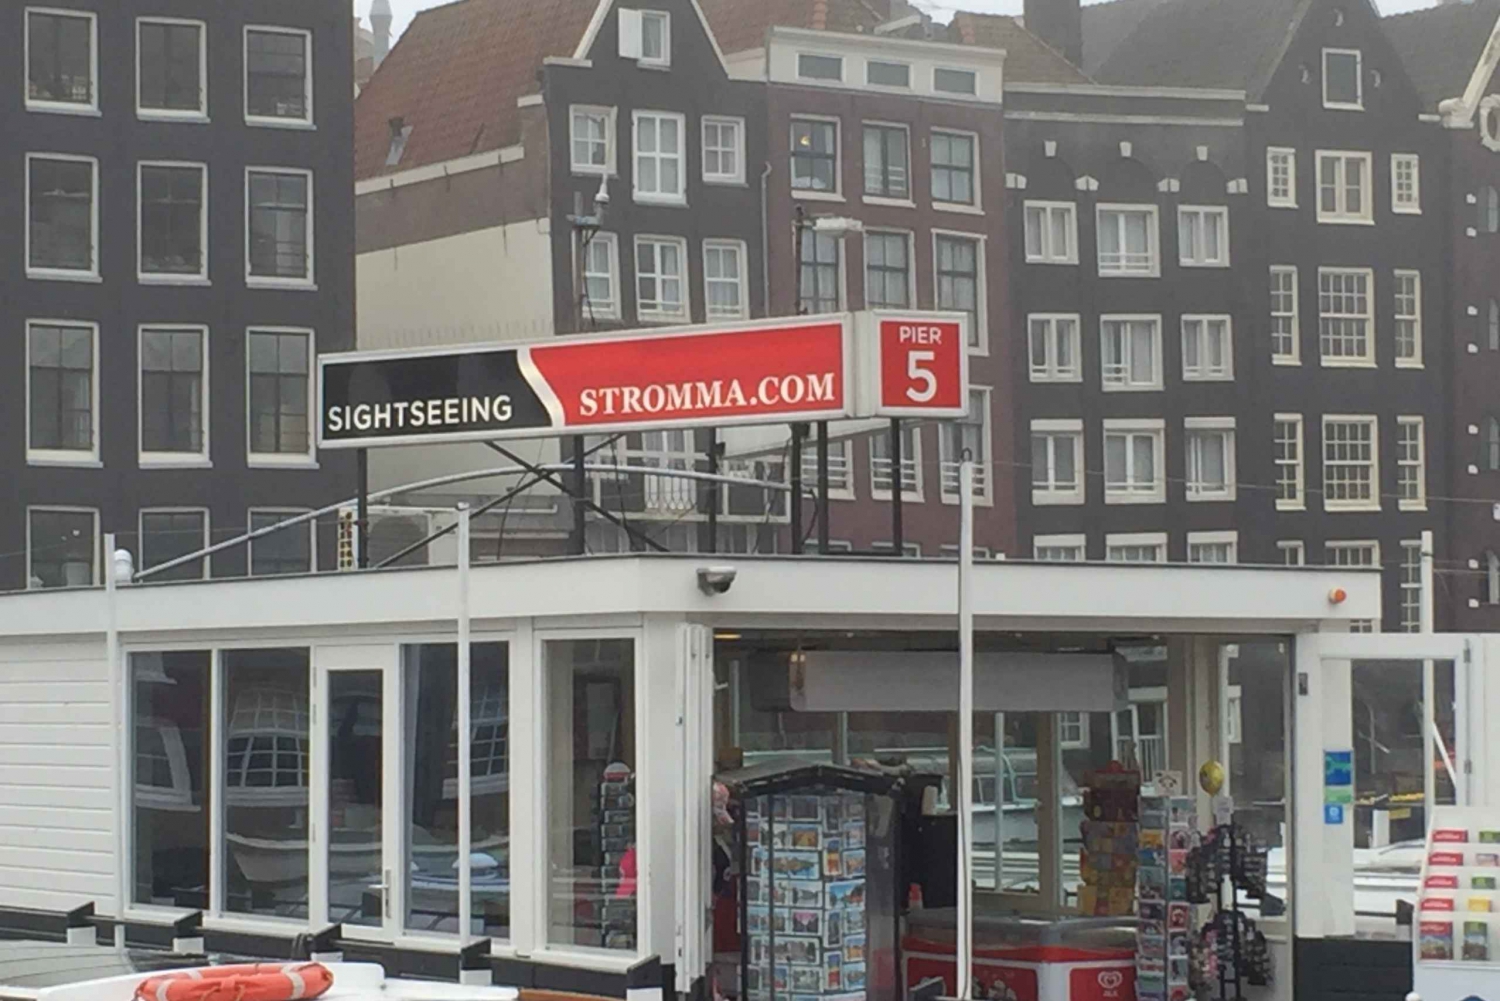 Selvguidet vandretur og skattejagt i Amsterdam